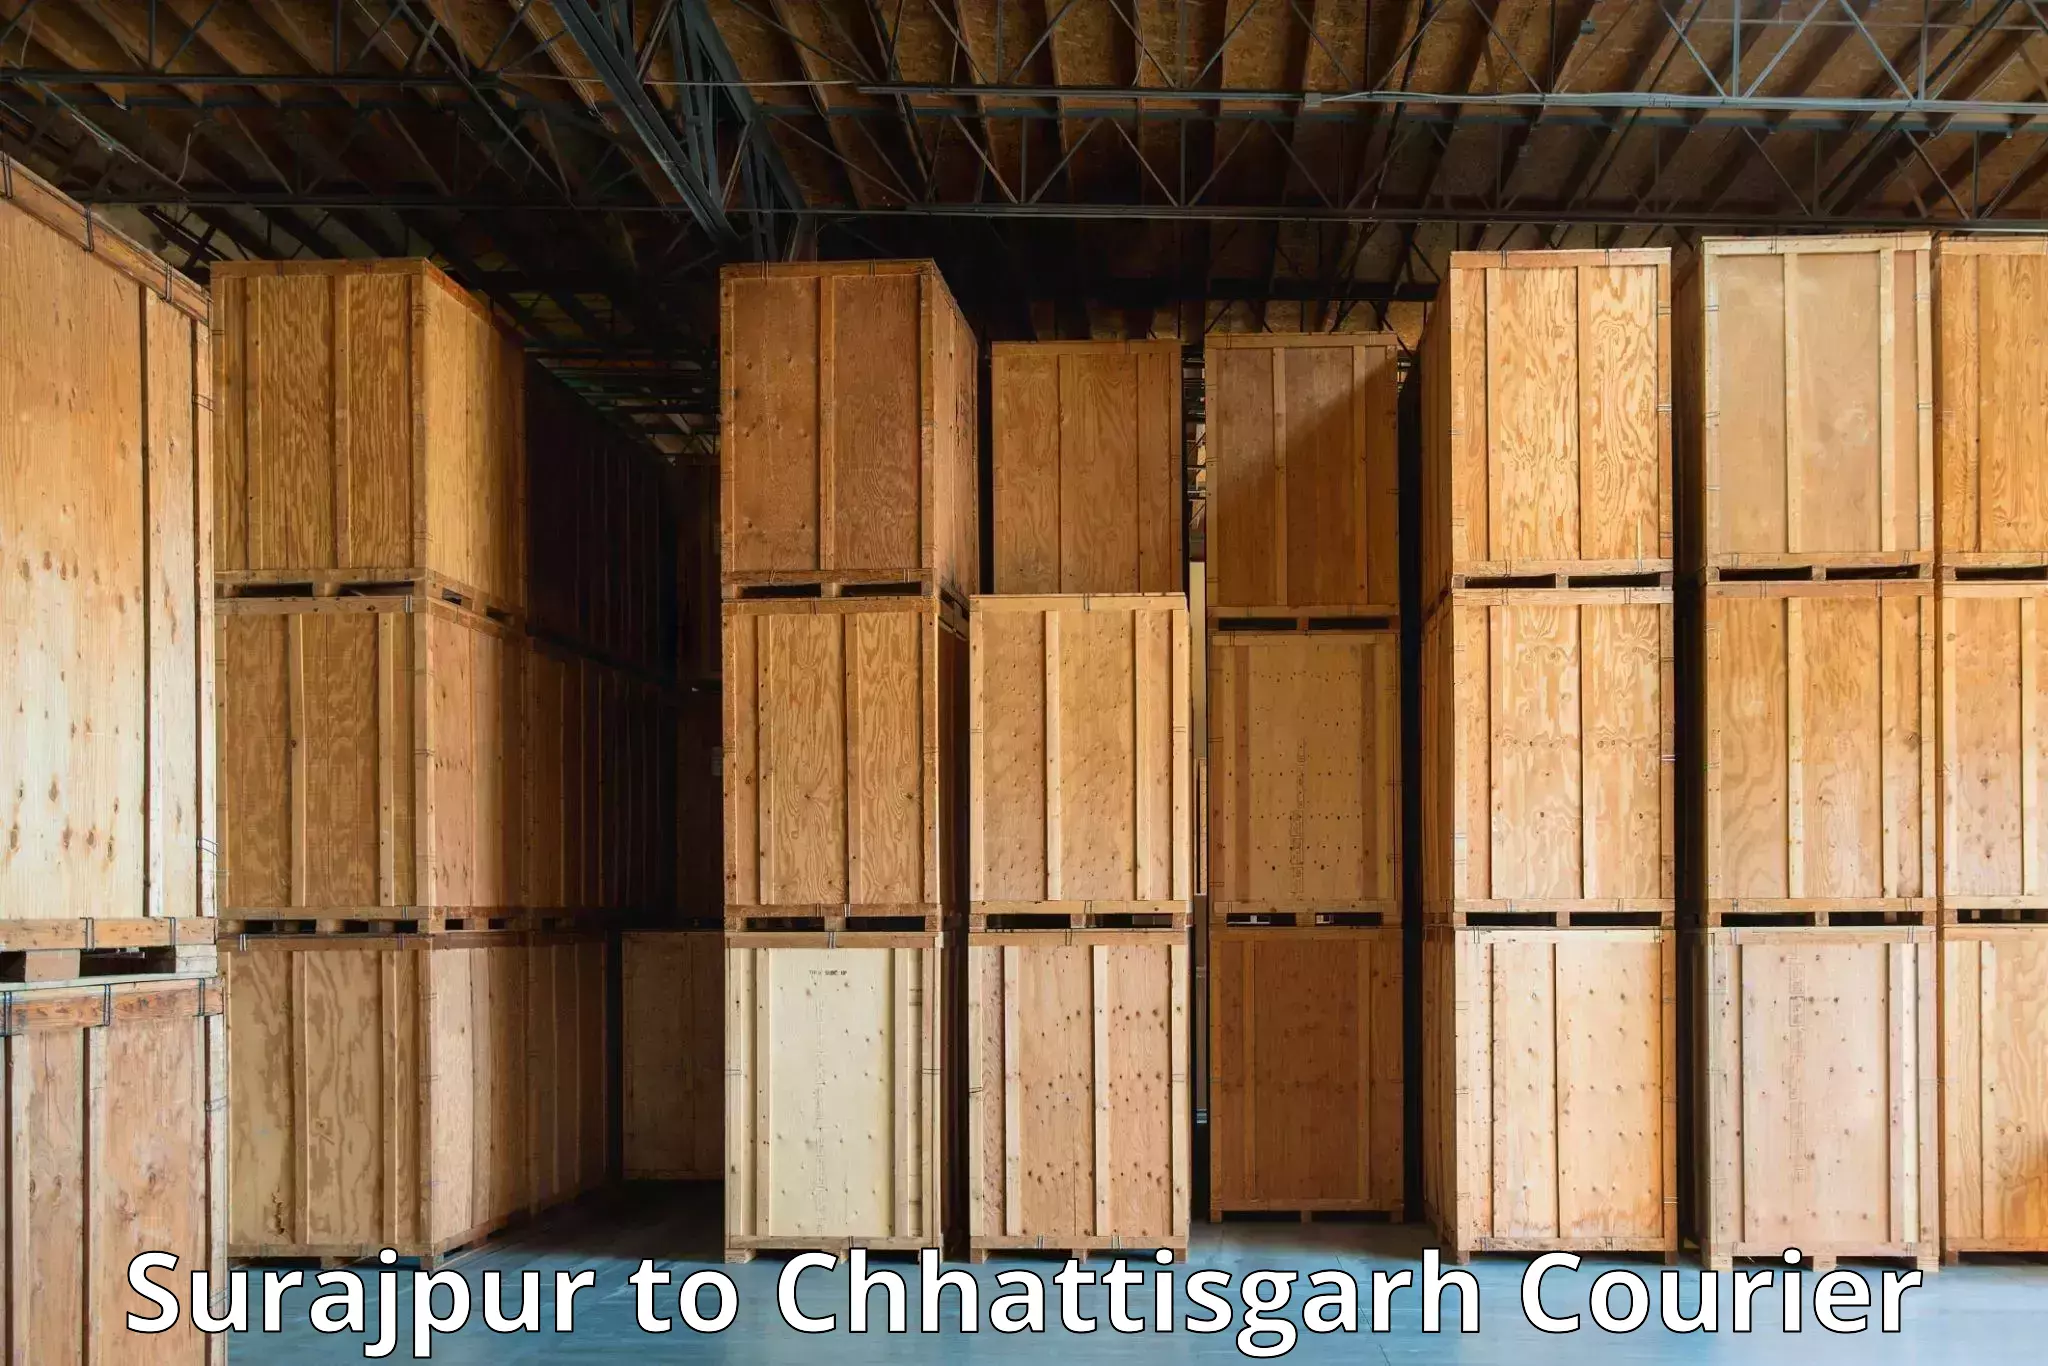 Courier service booking Surajpur to Mahasamund